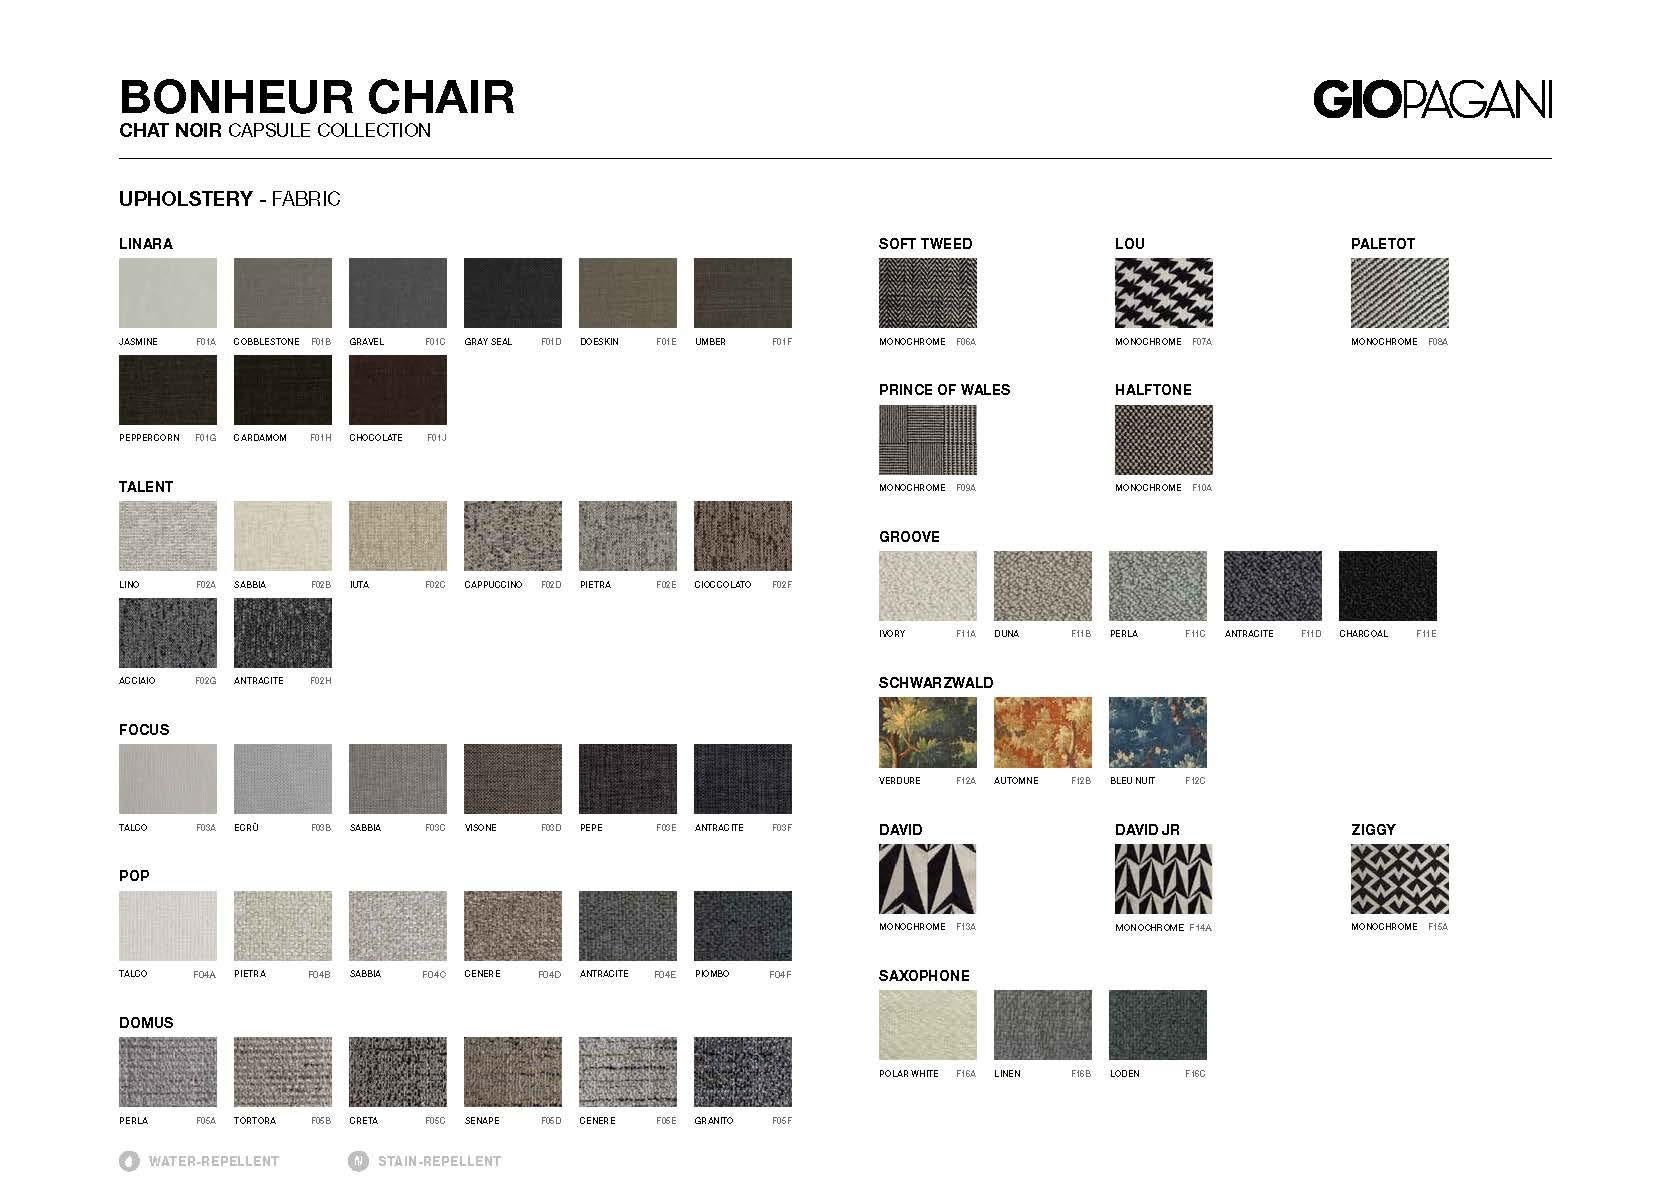 Metal Bonheur Chair Seventeenth-Century Tapestry Design Fabric Upholstery